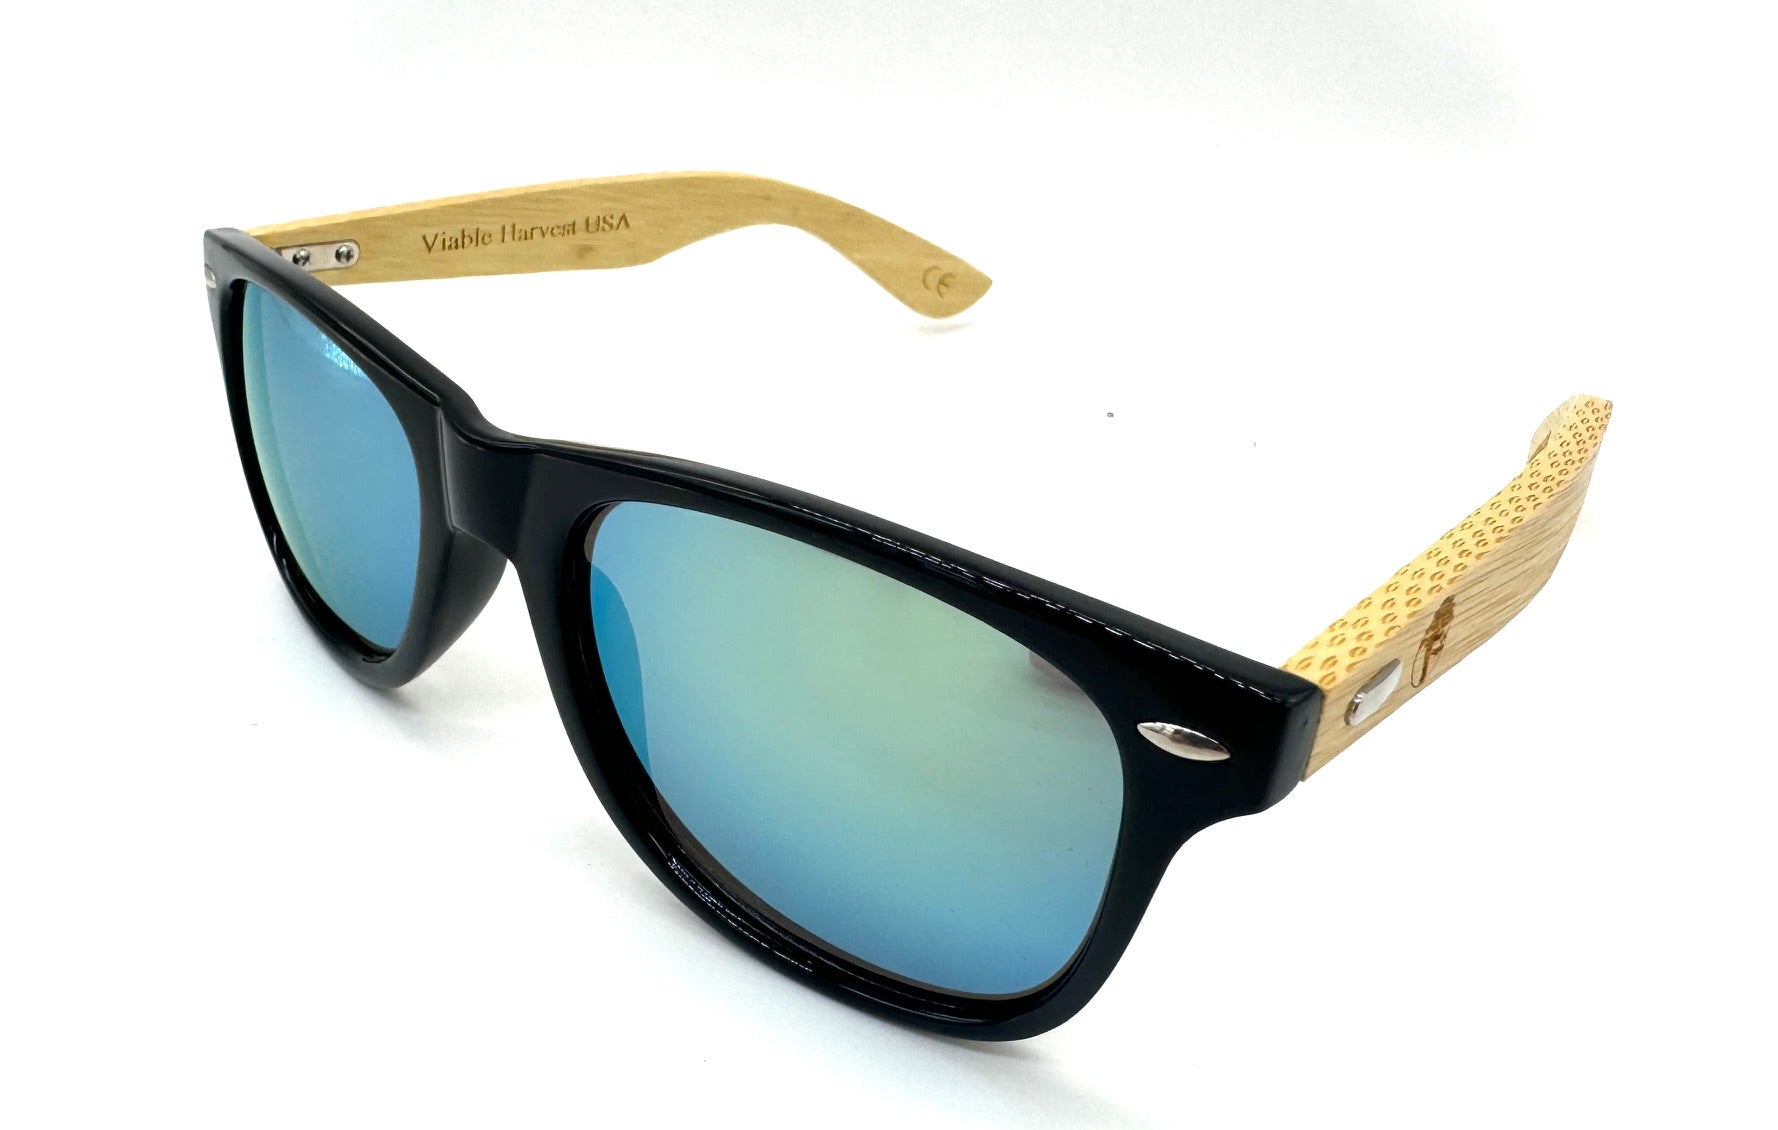 Handmade Wooden Sunglasses - Wayfarer Surf Style